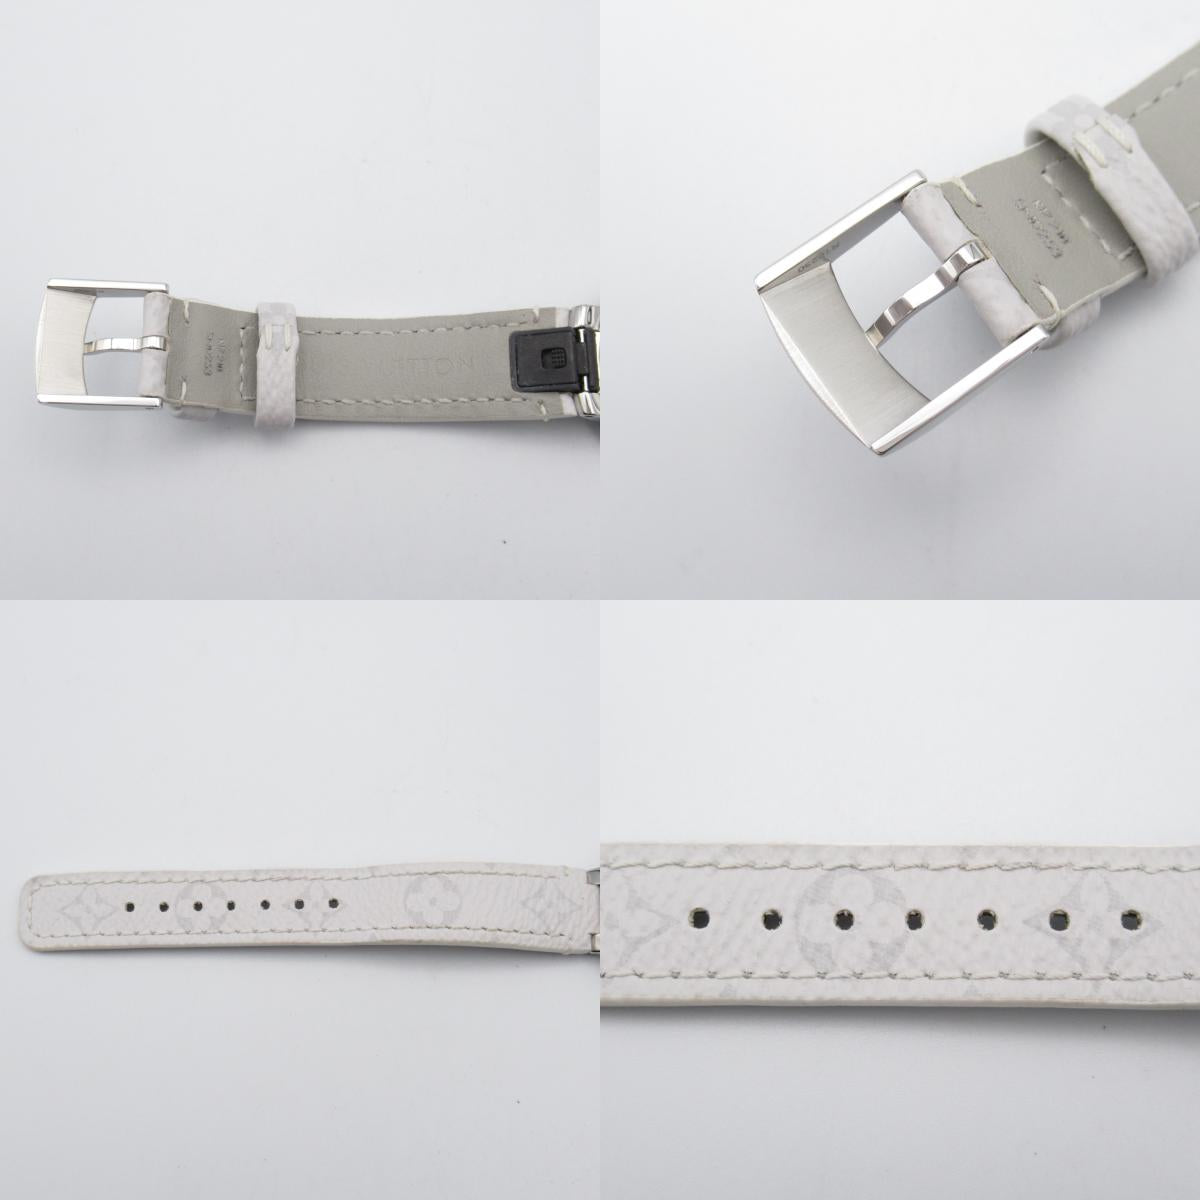 Louis Vuitton Louis Vuitton Diamond Beagle  Watch Stainless Steel Leather Belt  White S QA109